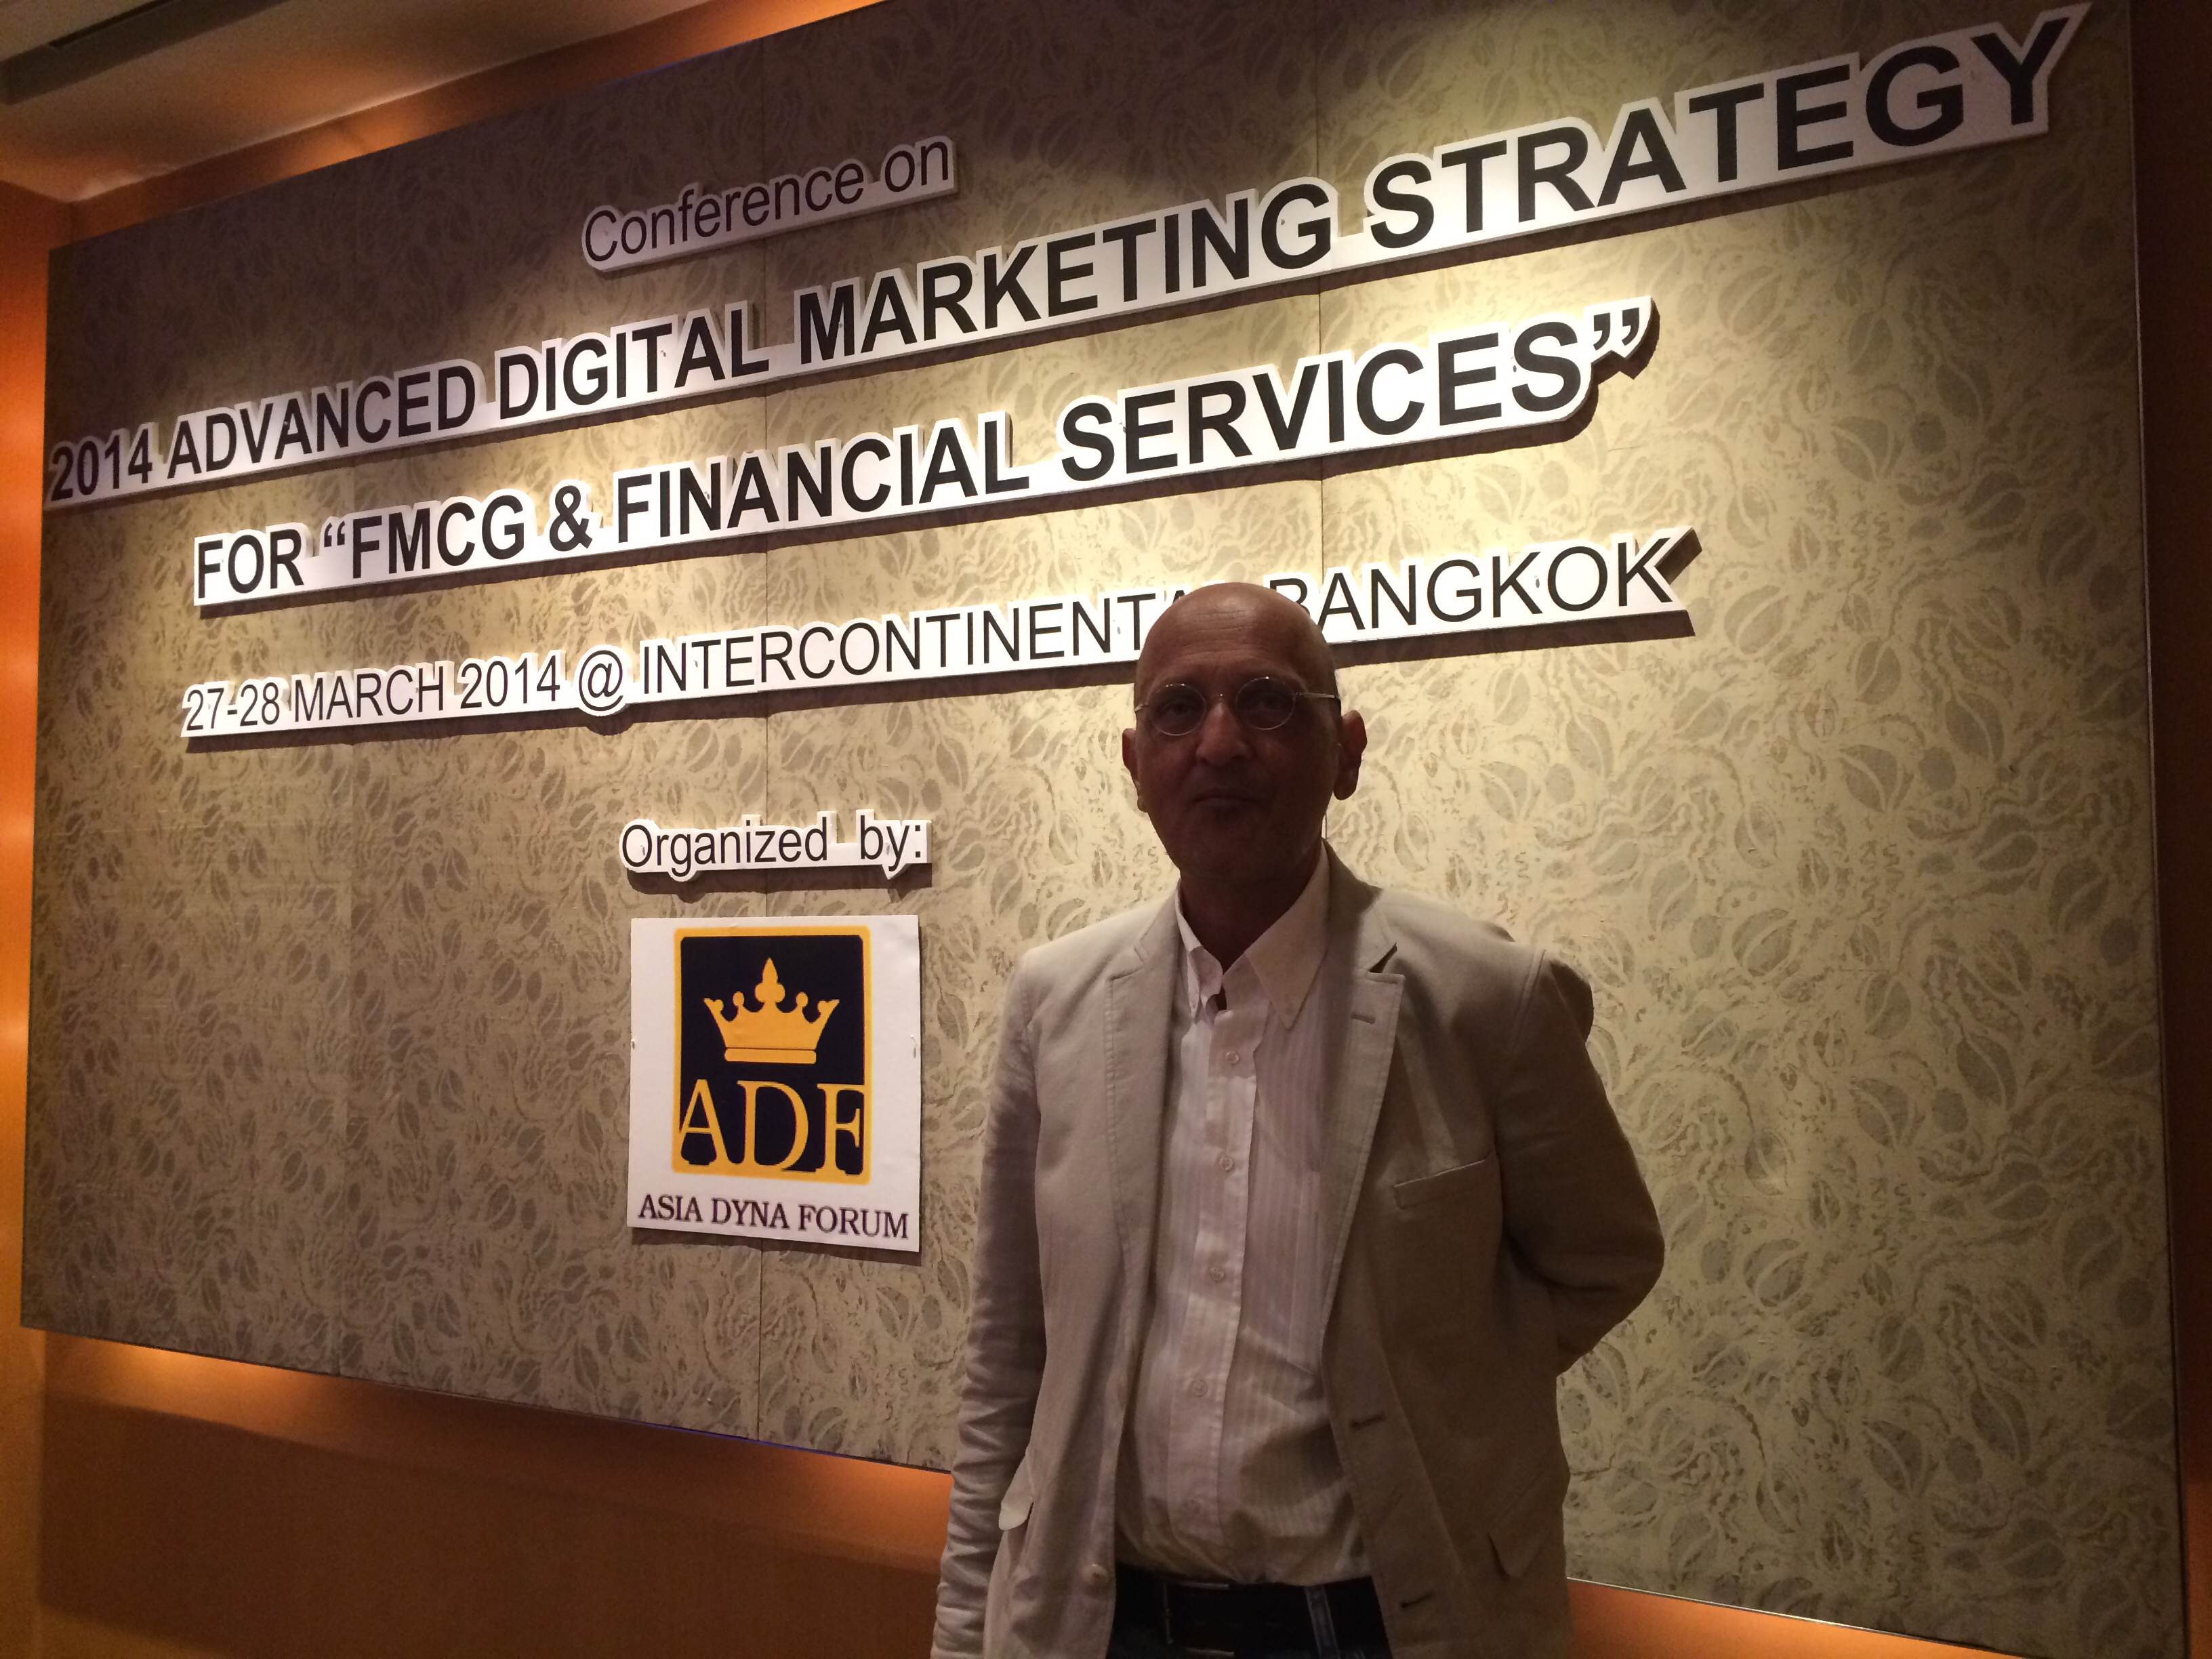 2014 Advanced Digital Marketing Strategy Conference